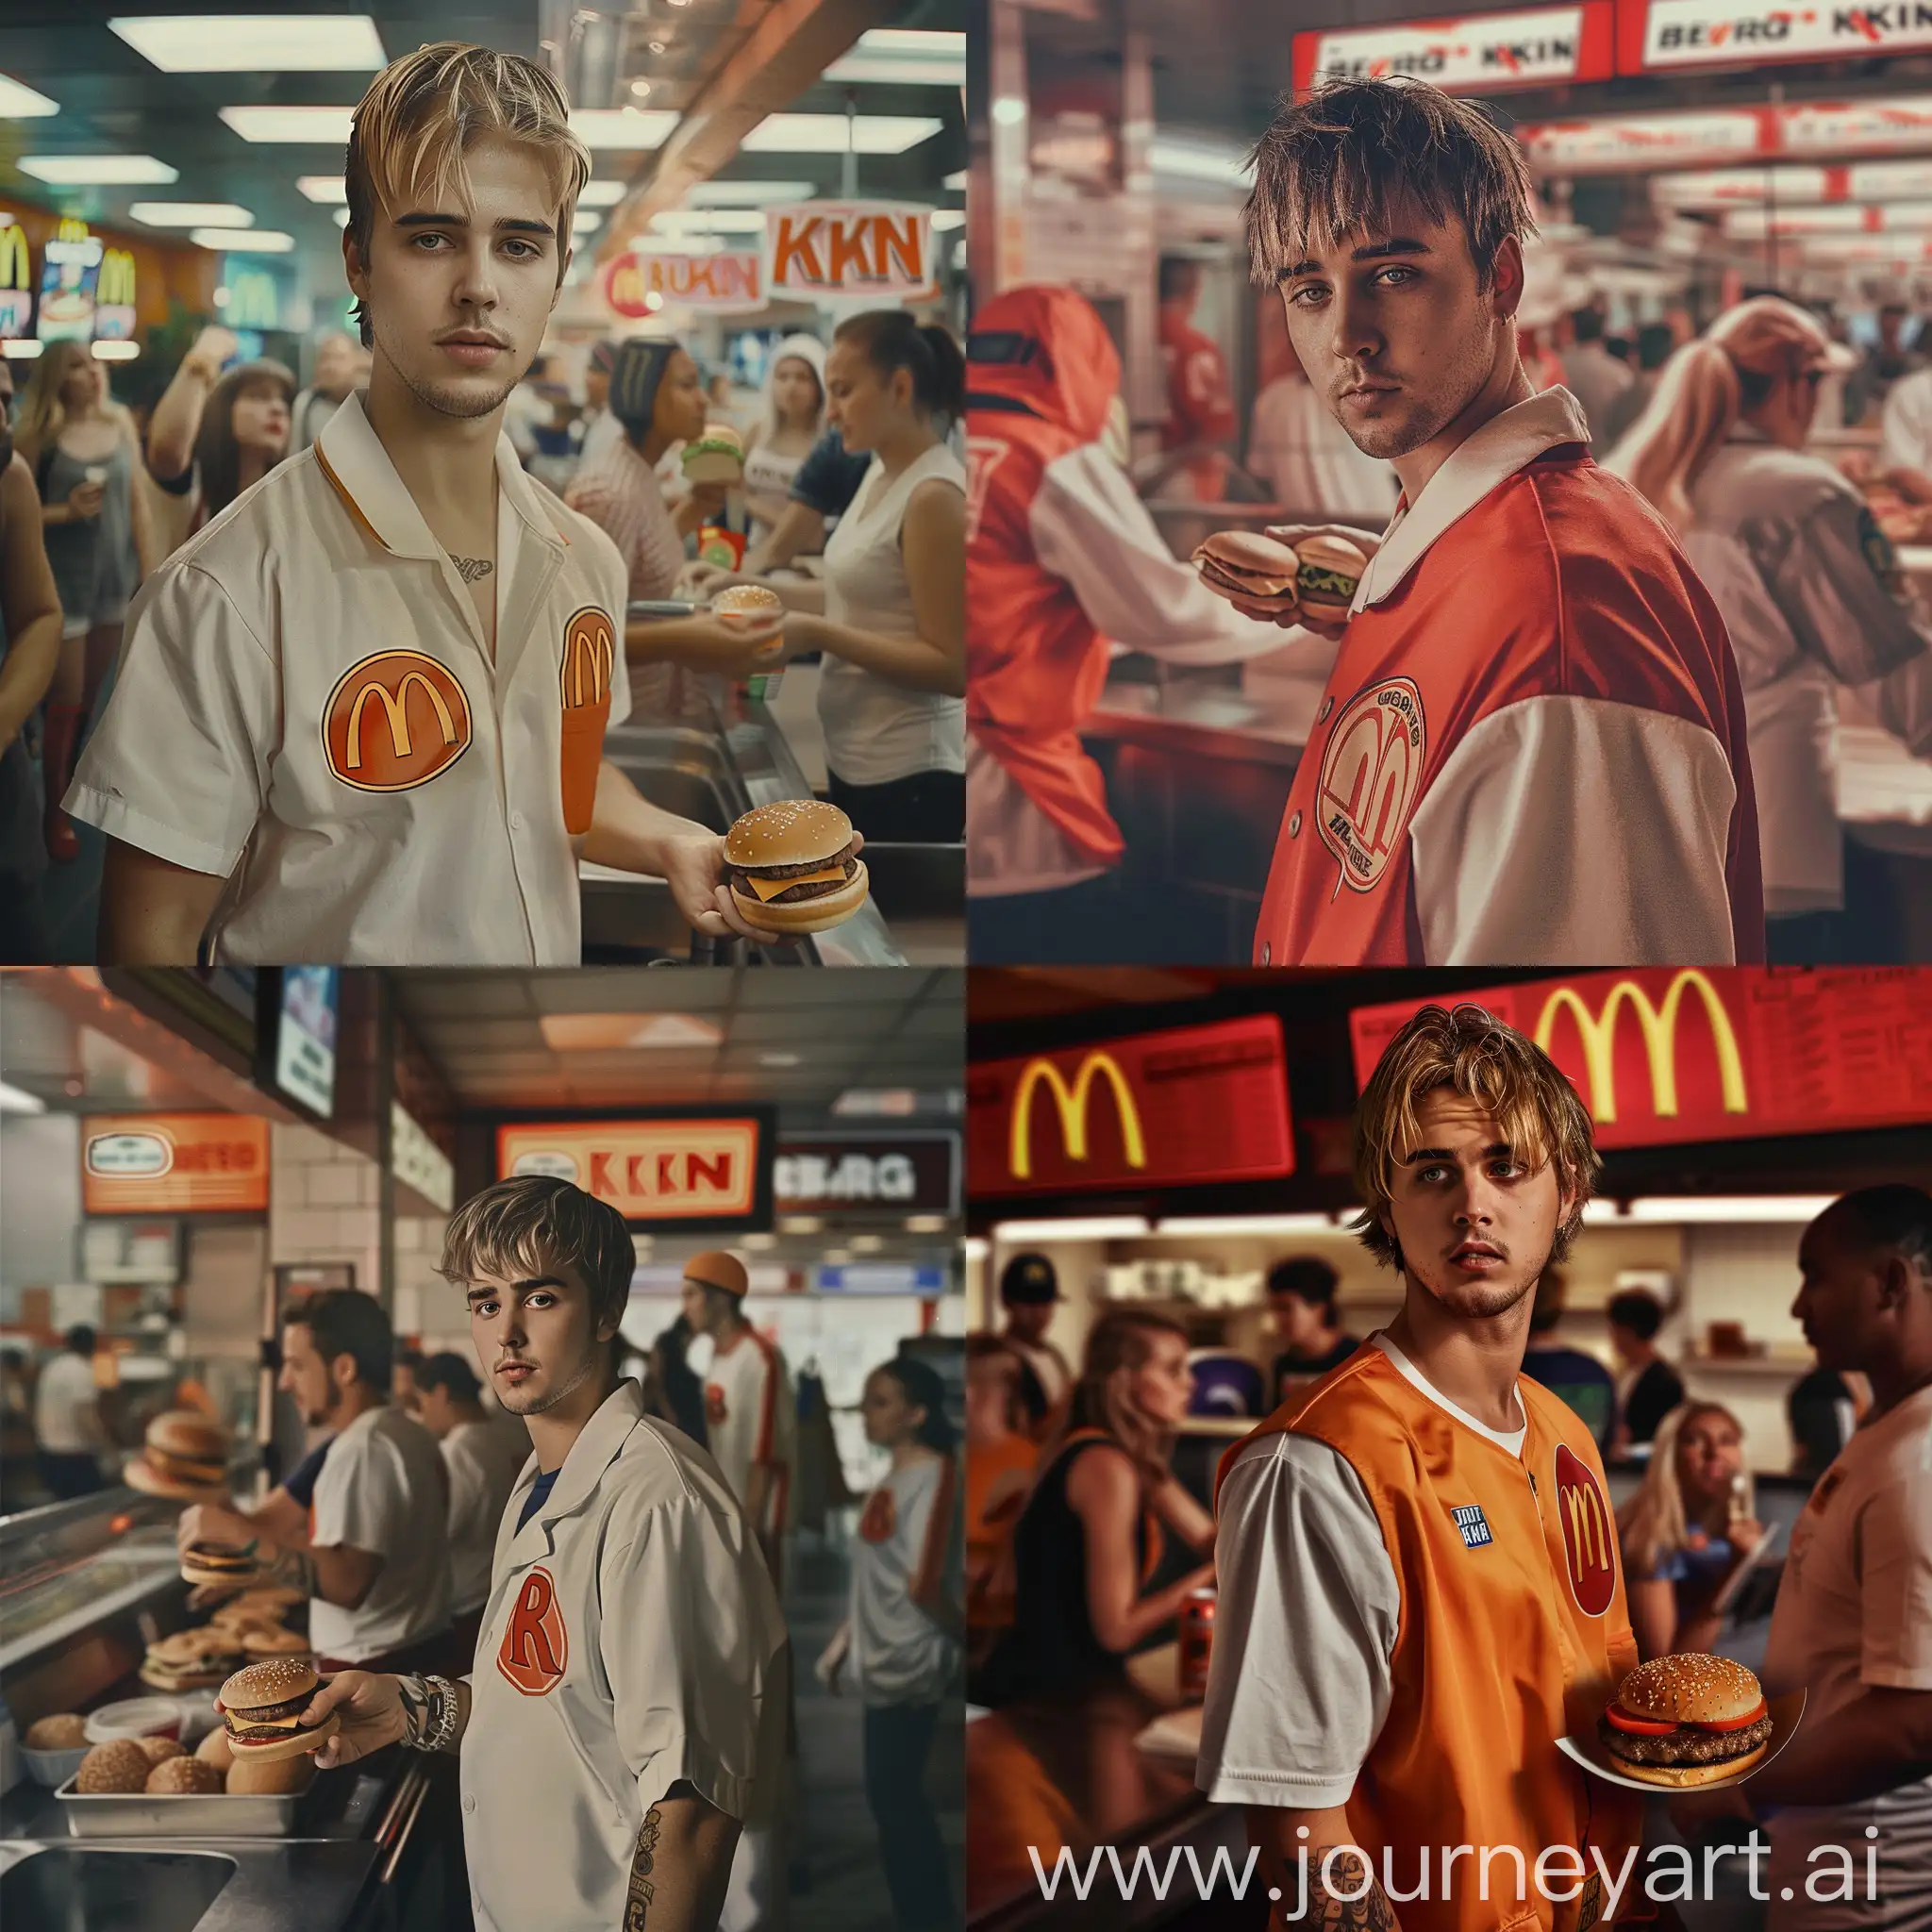 Hyperrealistic-Justin-Bieber-Burger-King-Uniform-Portrait